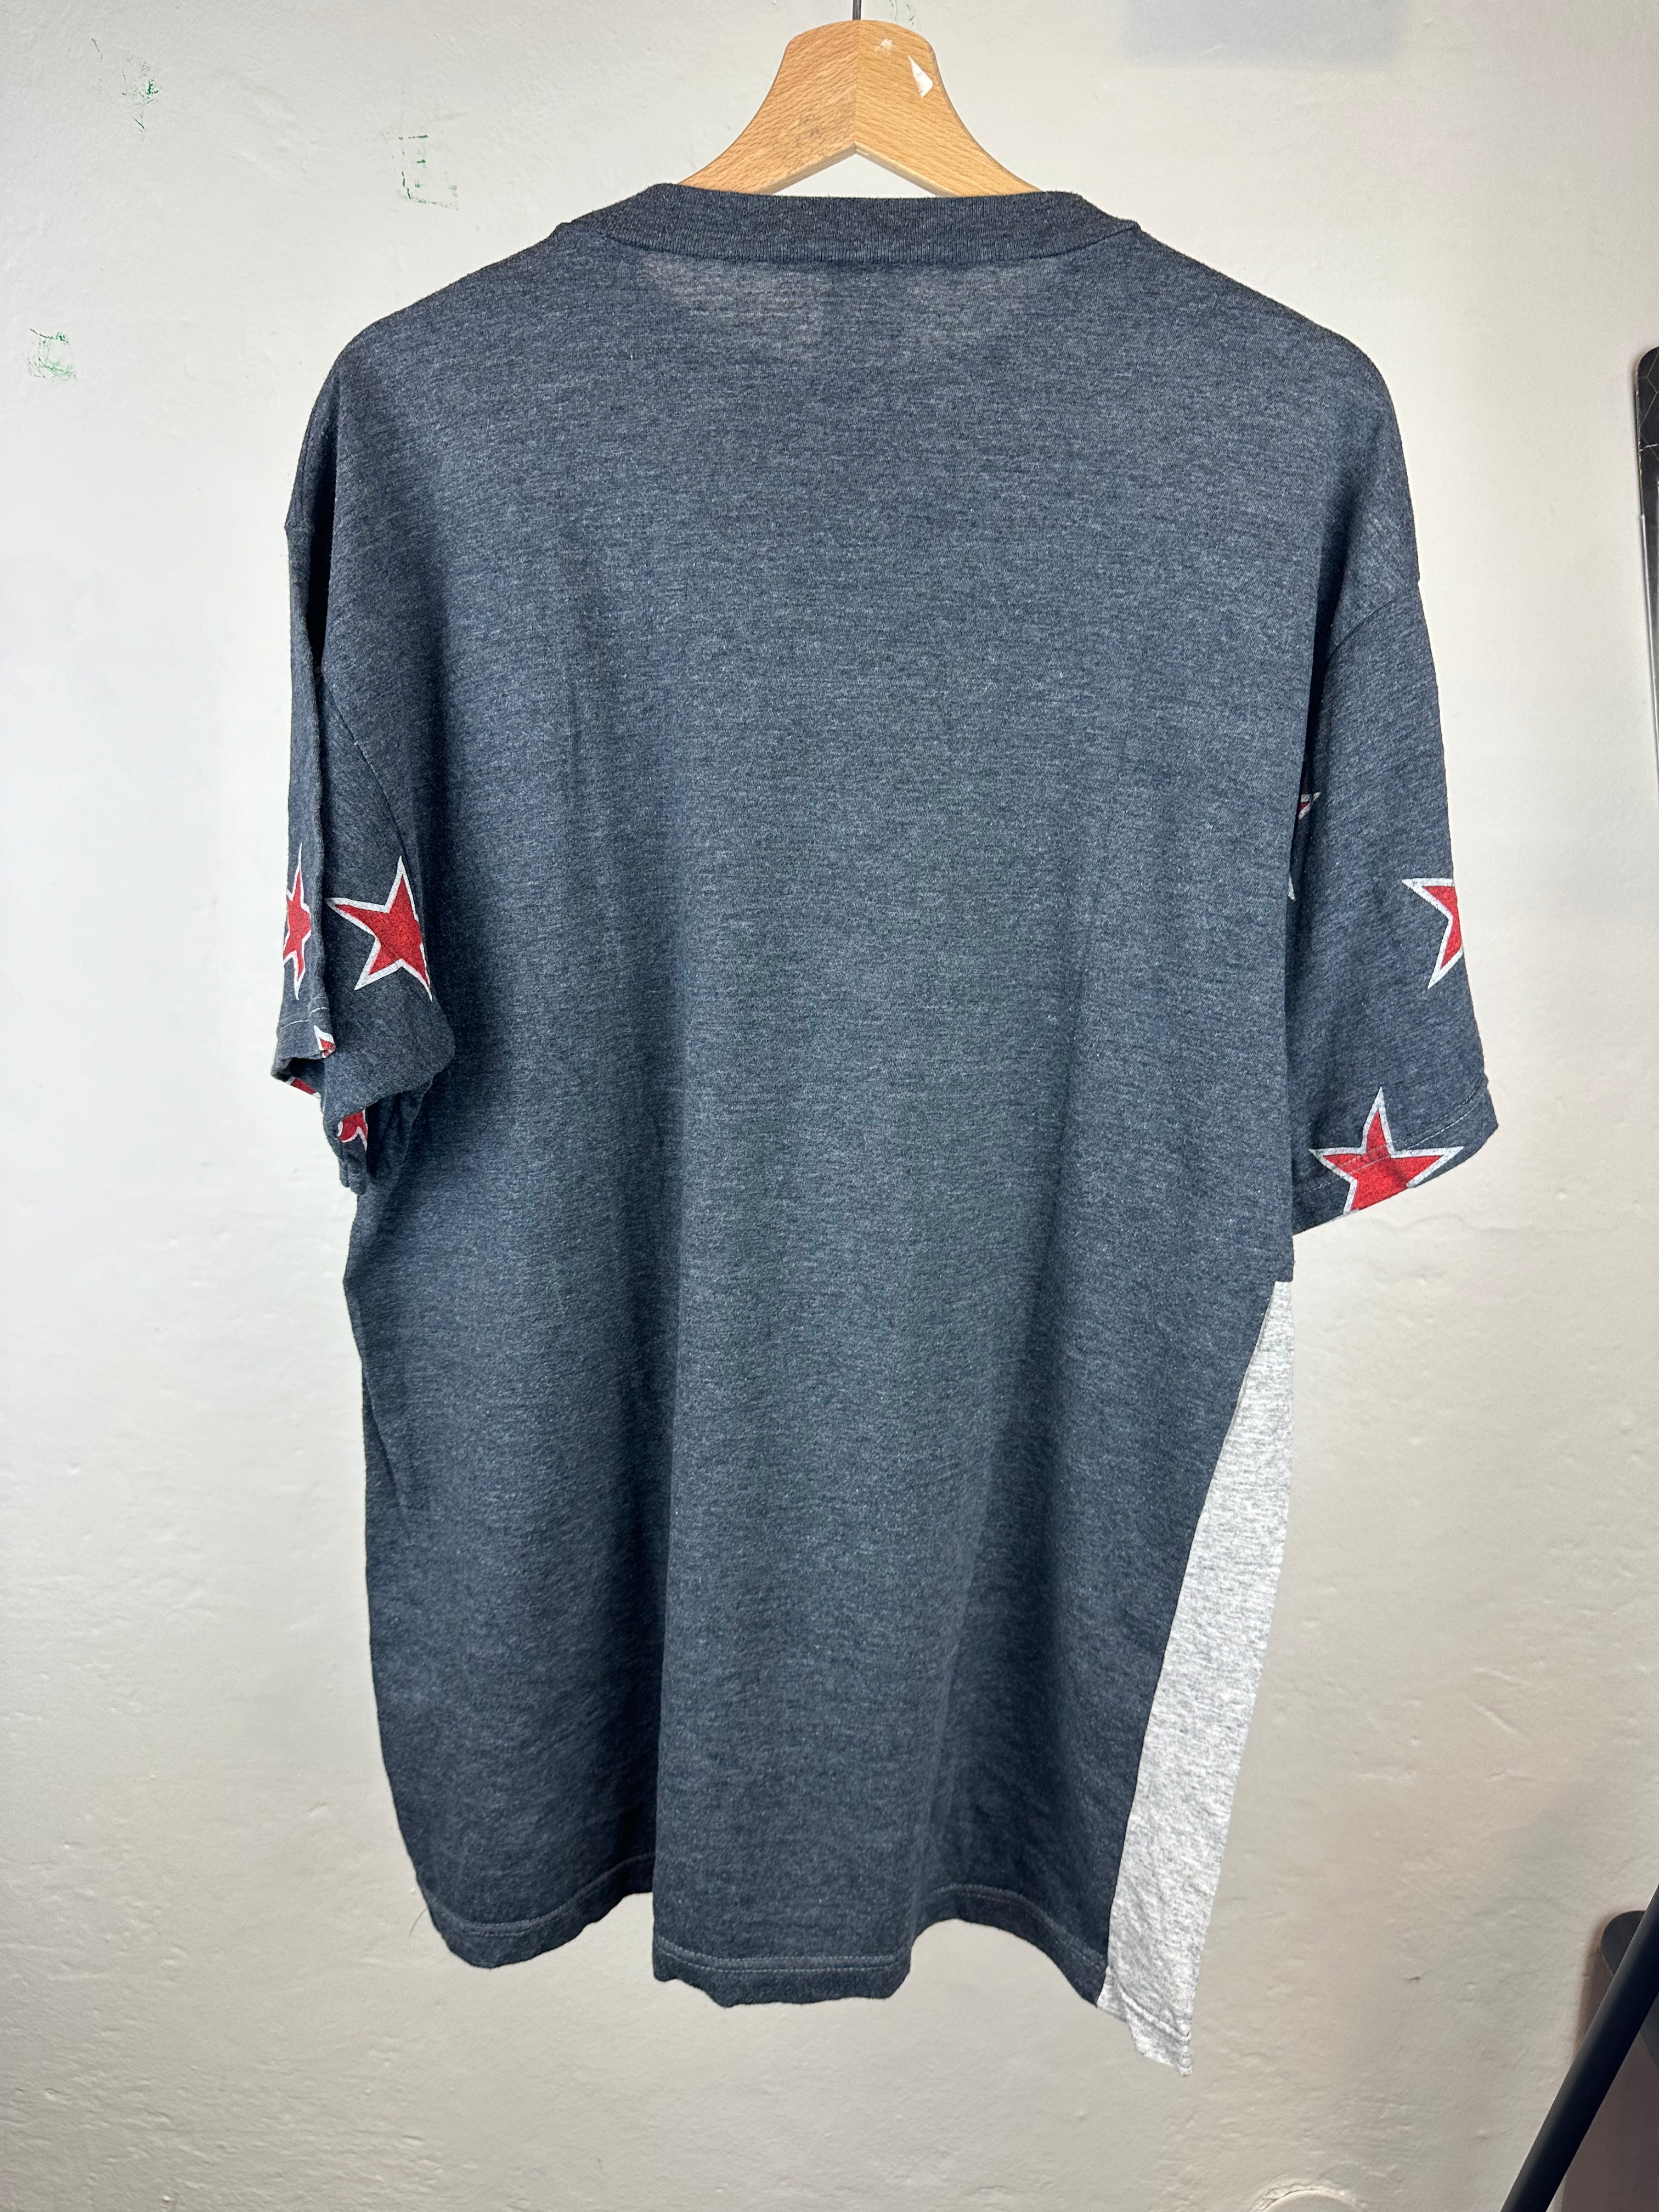 Vintage American Basic 90s T-shirt - size L